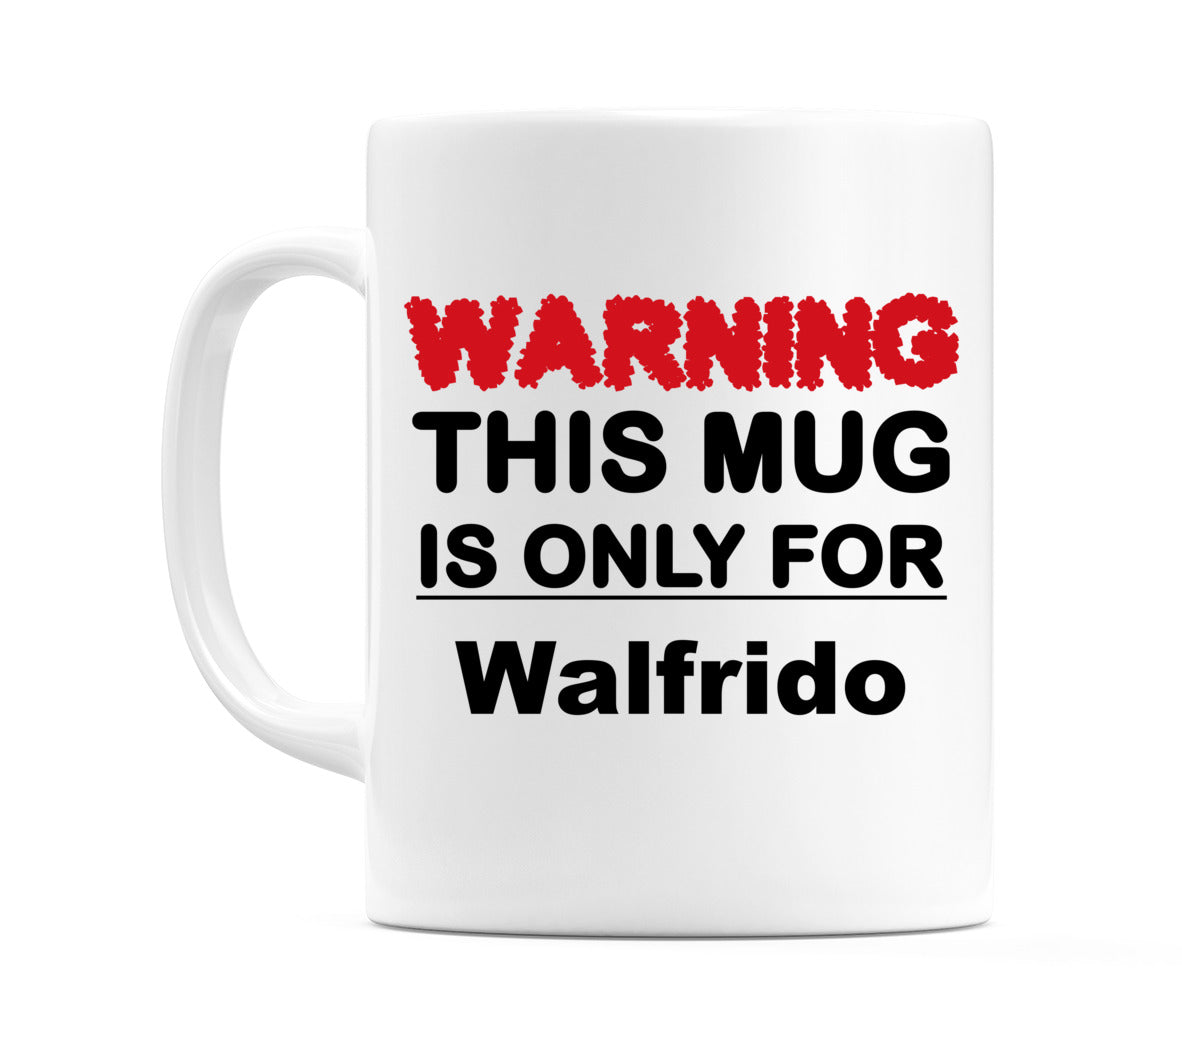 Warning This Mug is ONLY for Walfrido Mug